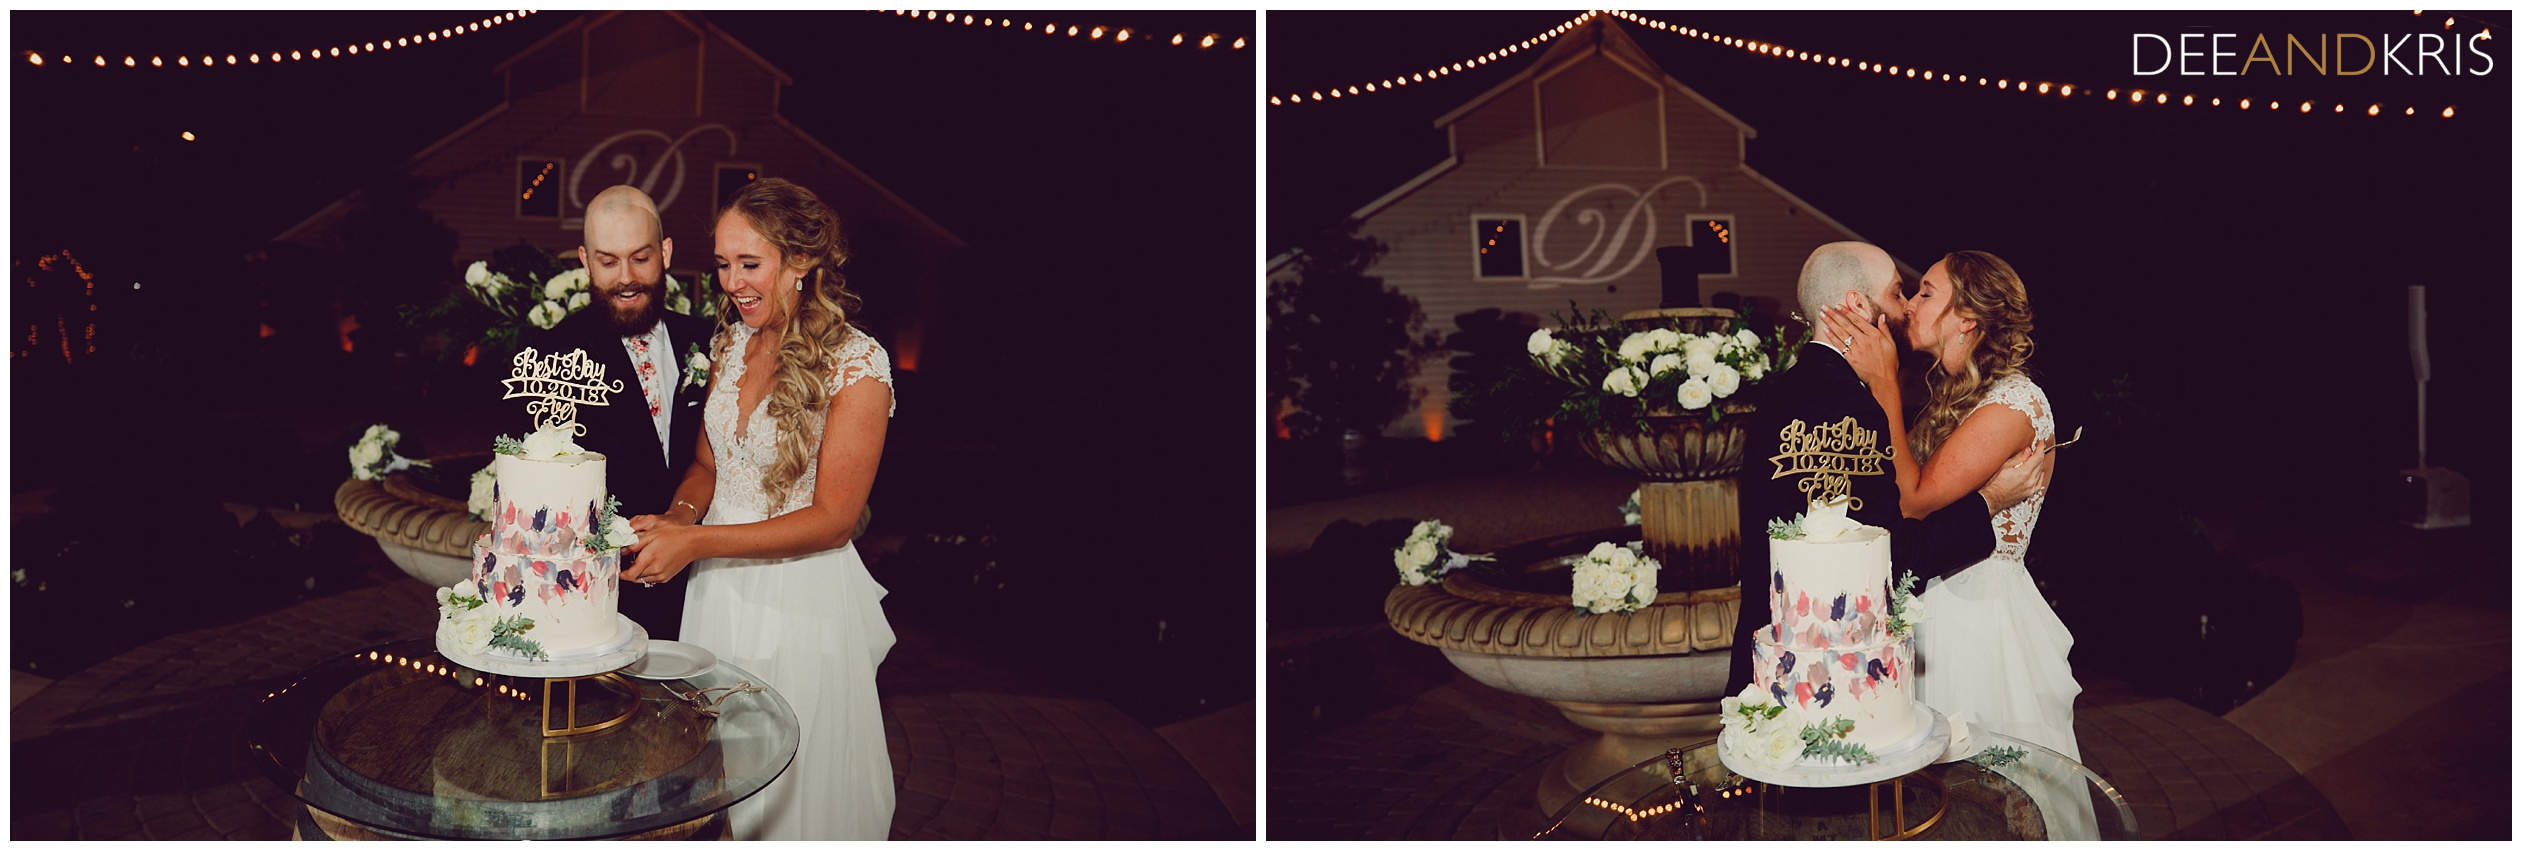 Scribner Bend Wedding photos, wedding details, cake cutting, photographed by Sacramento Wedding photographer Dee and Kris Photography